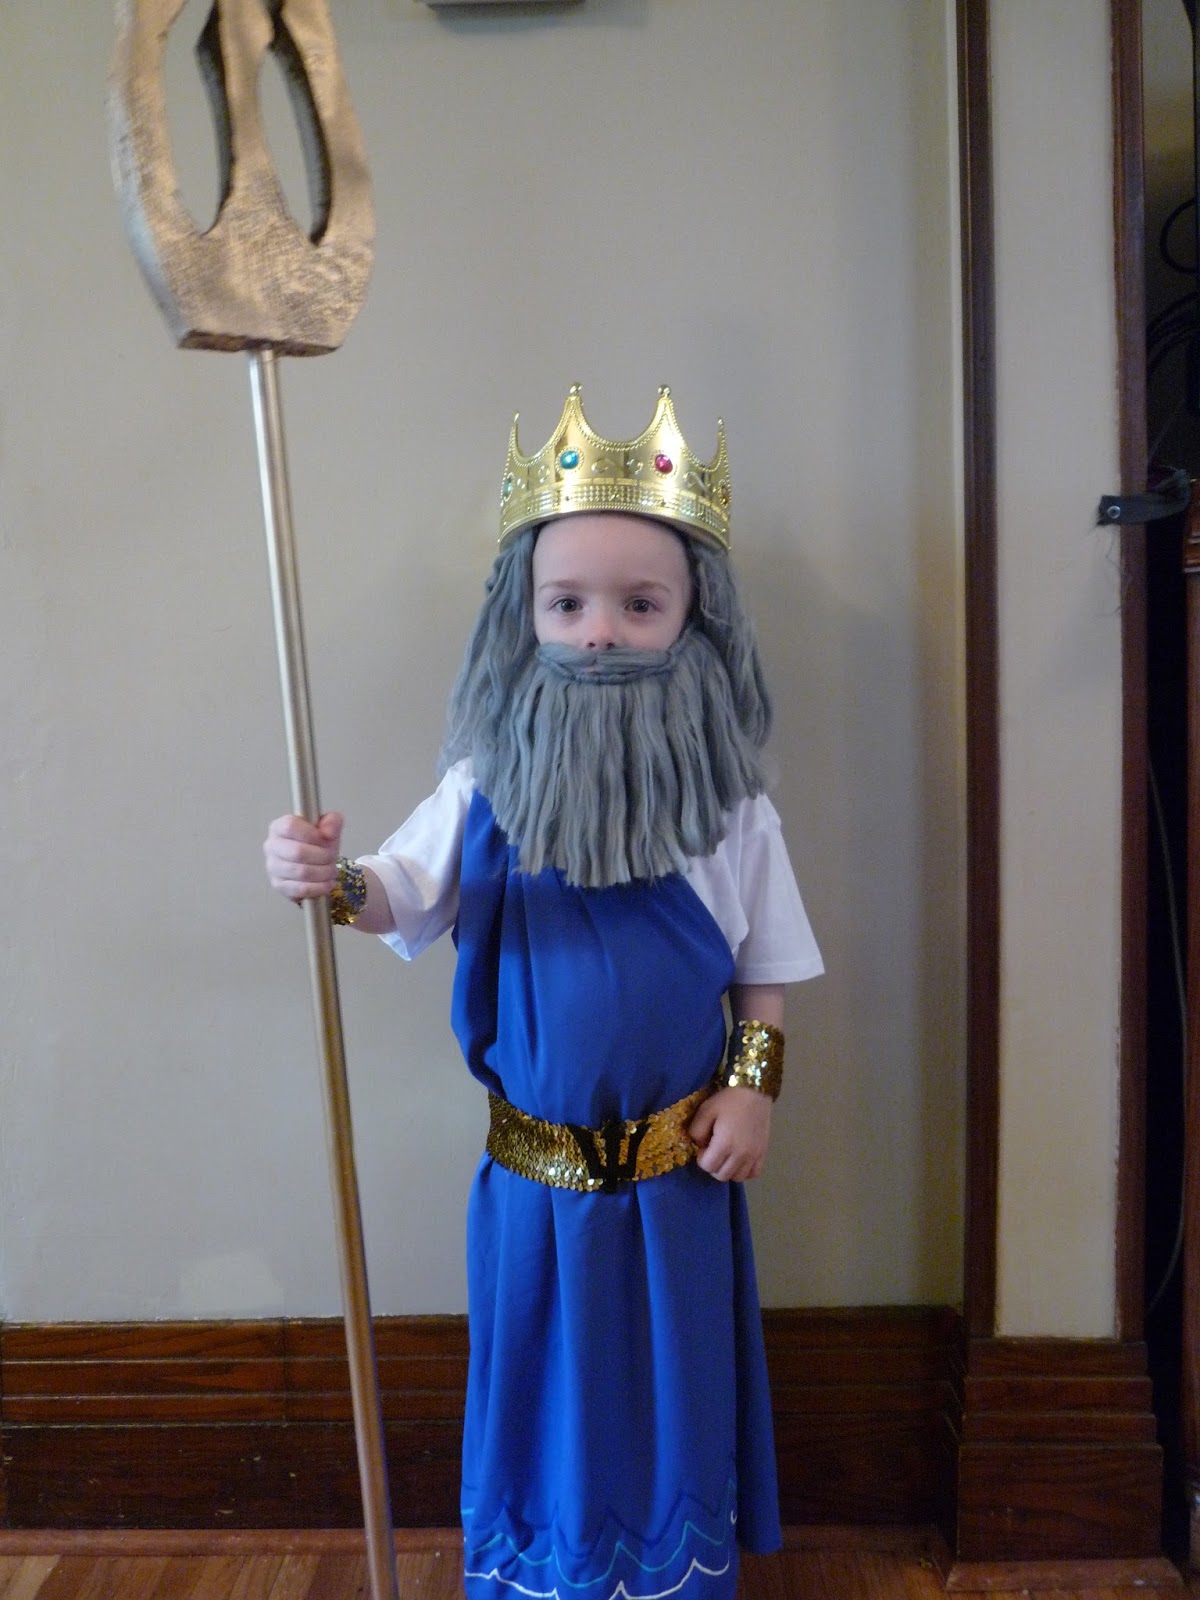 Full Time Frugal : DIY costume - $10 Poseidon!